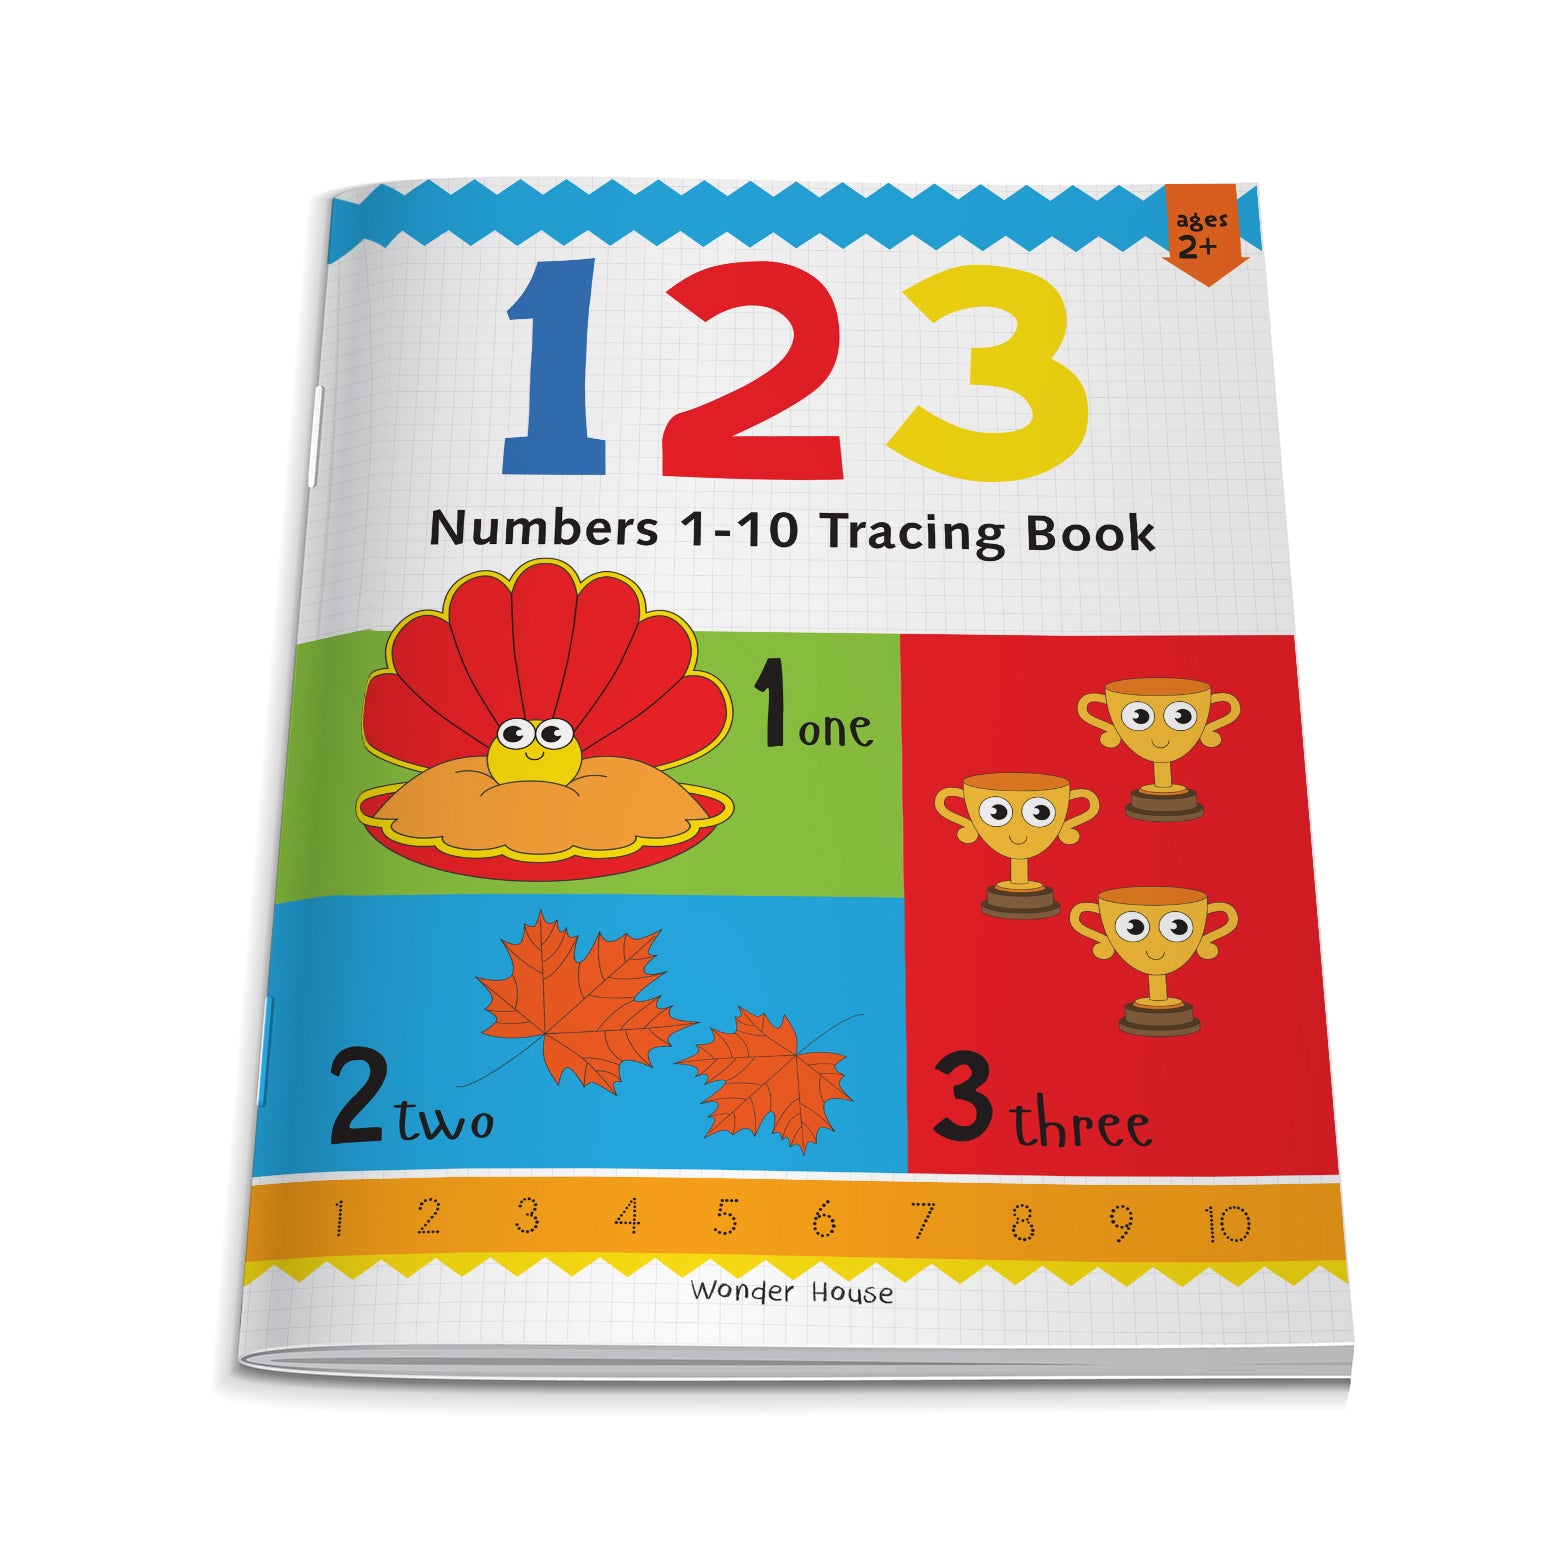 Preschool Activity Book: 123 - Numbers 1-10 Tracing Book For Kids